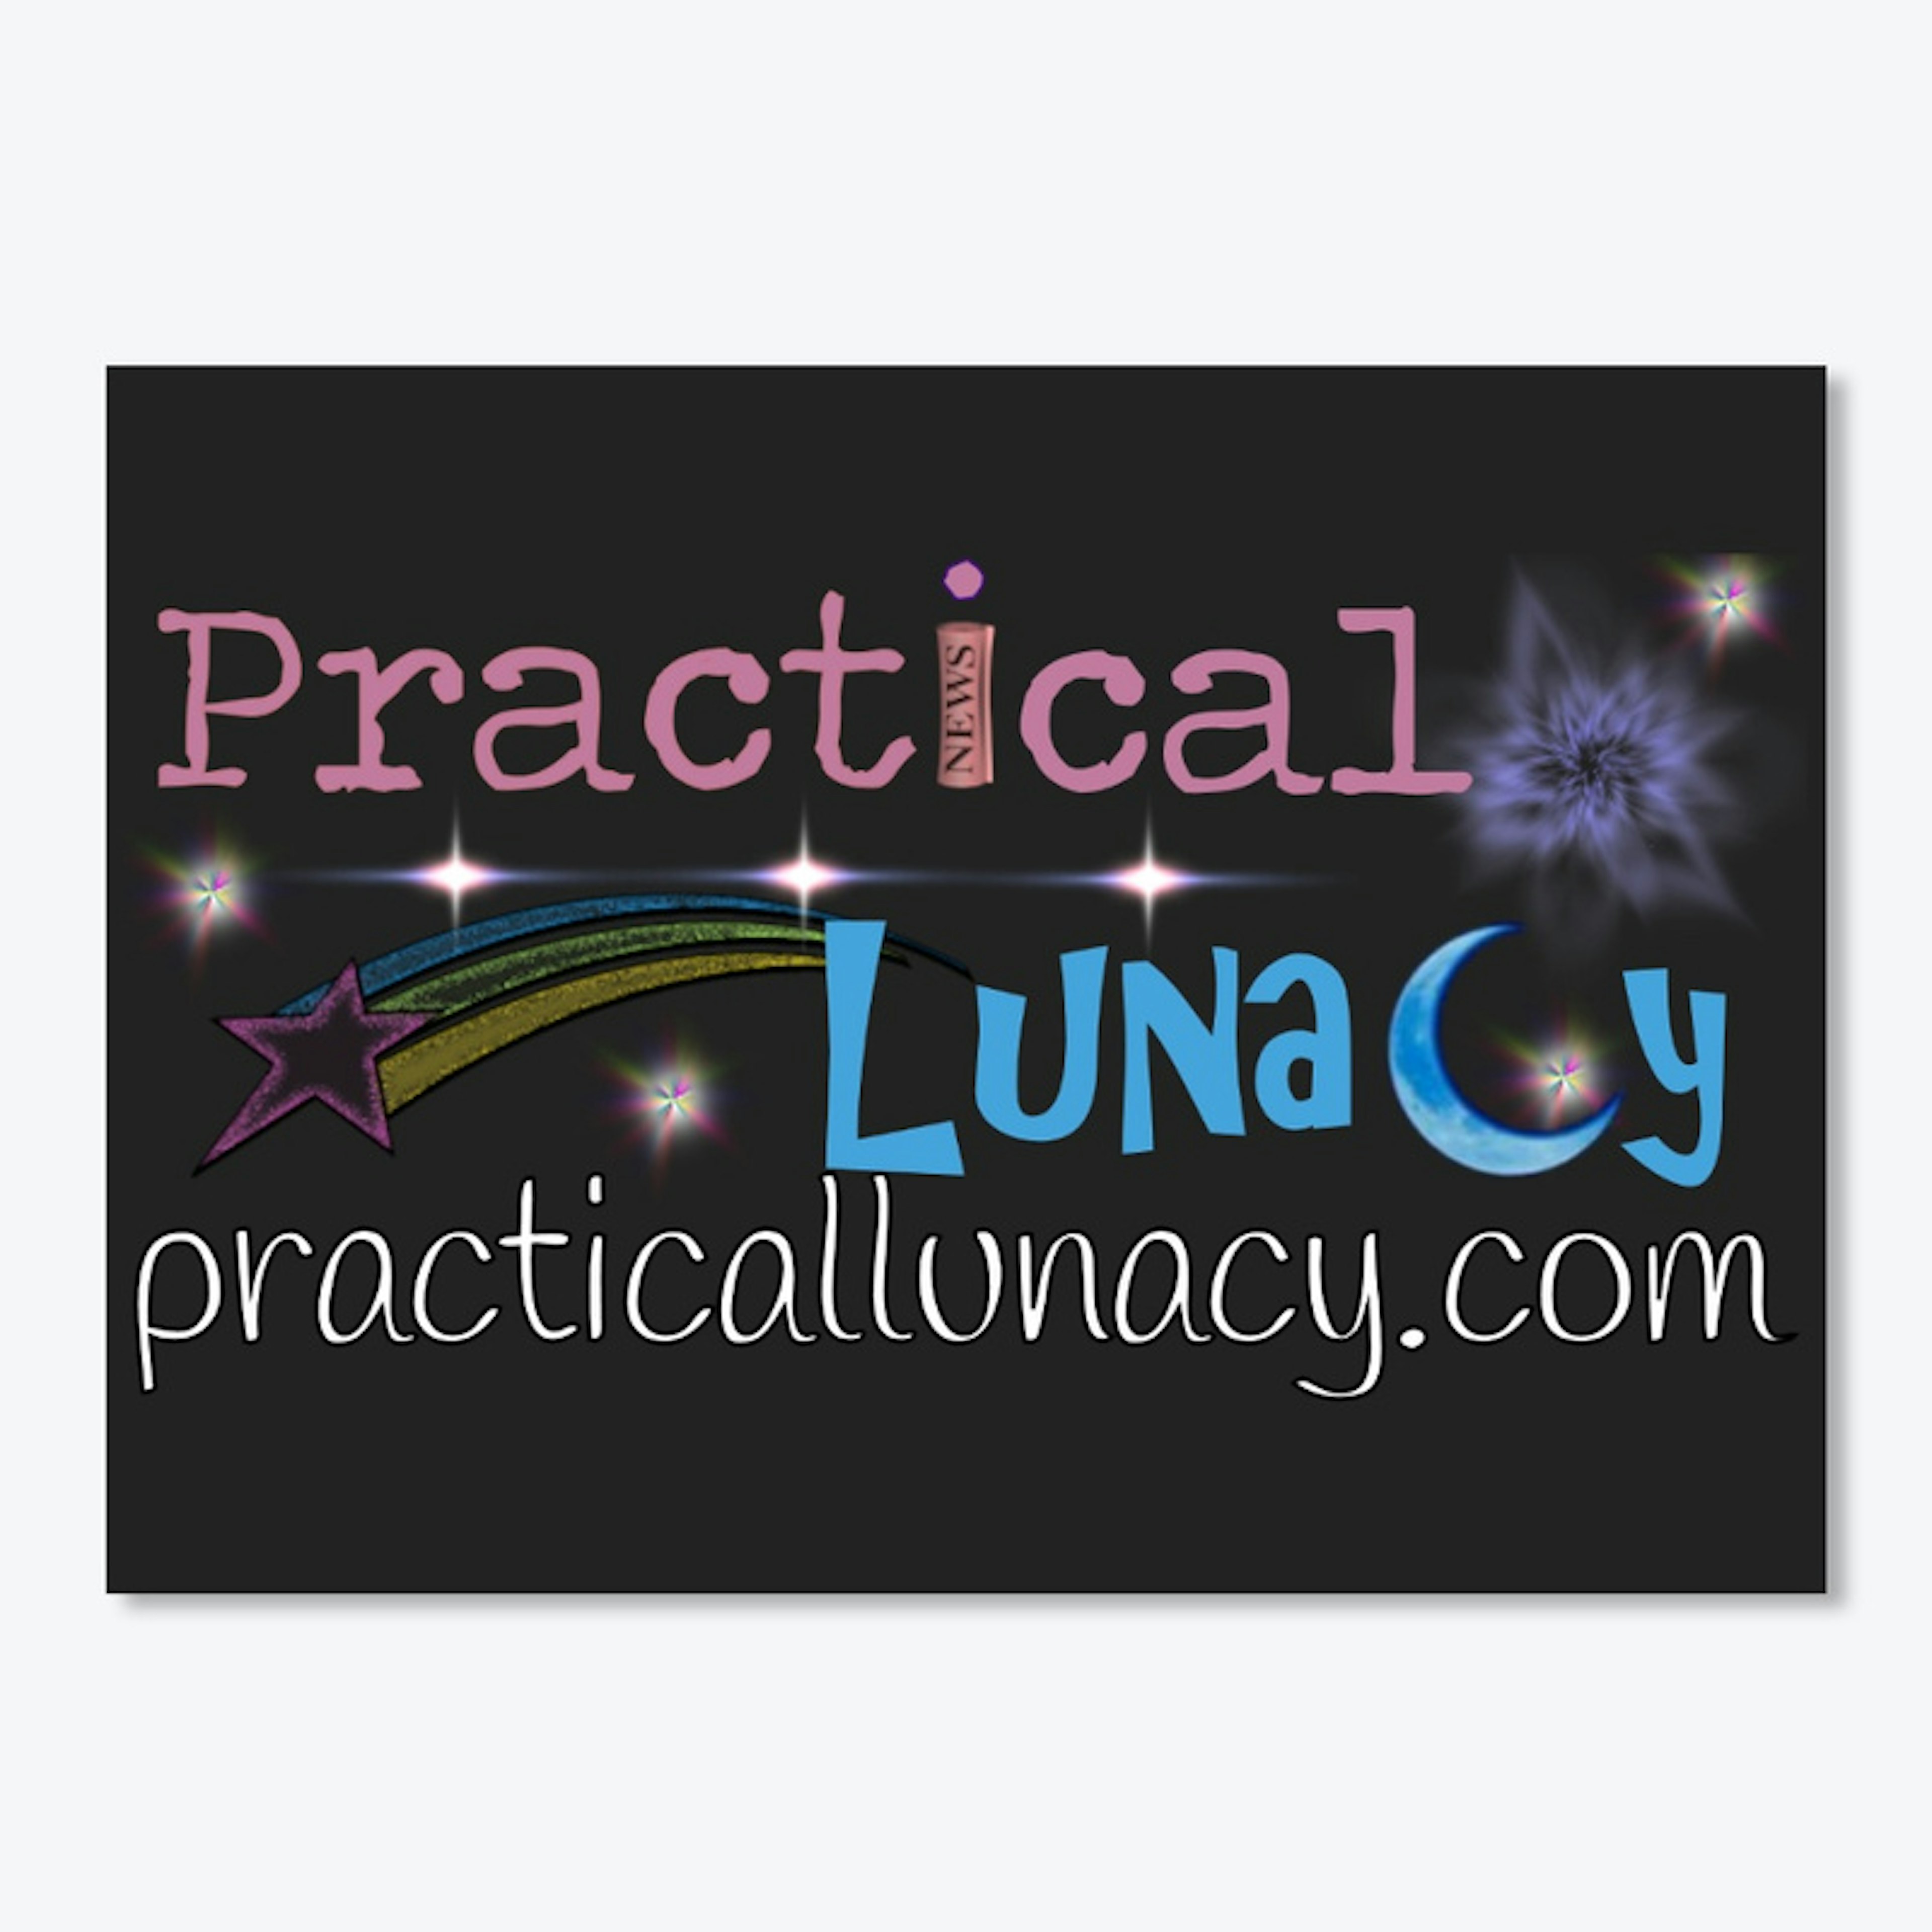 Practical Lunacy